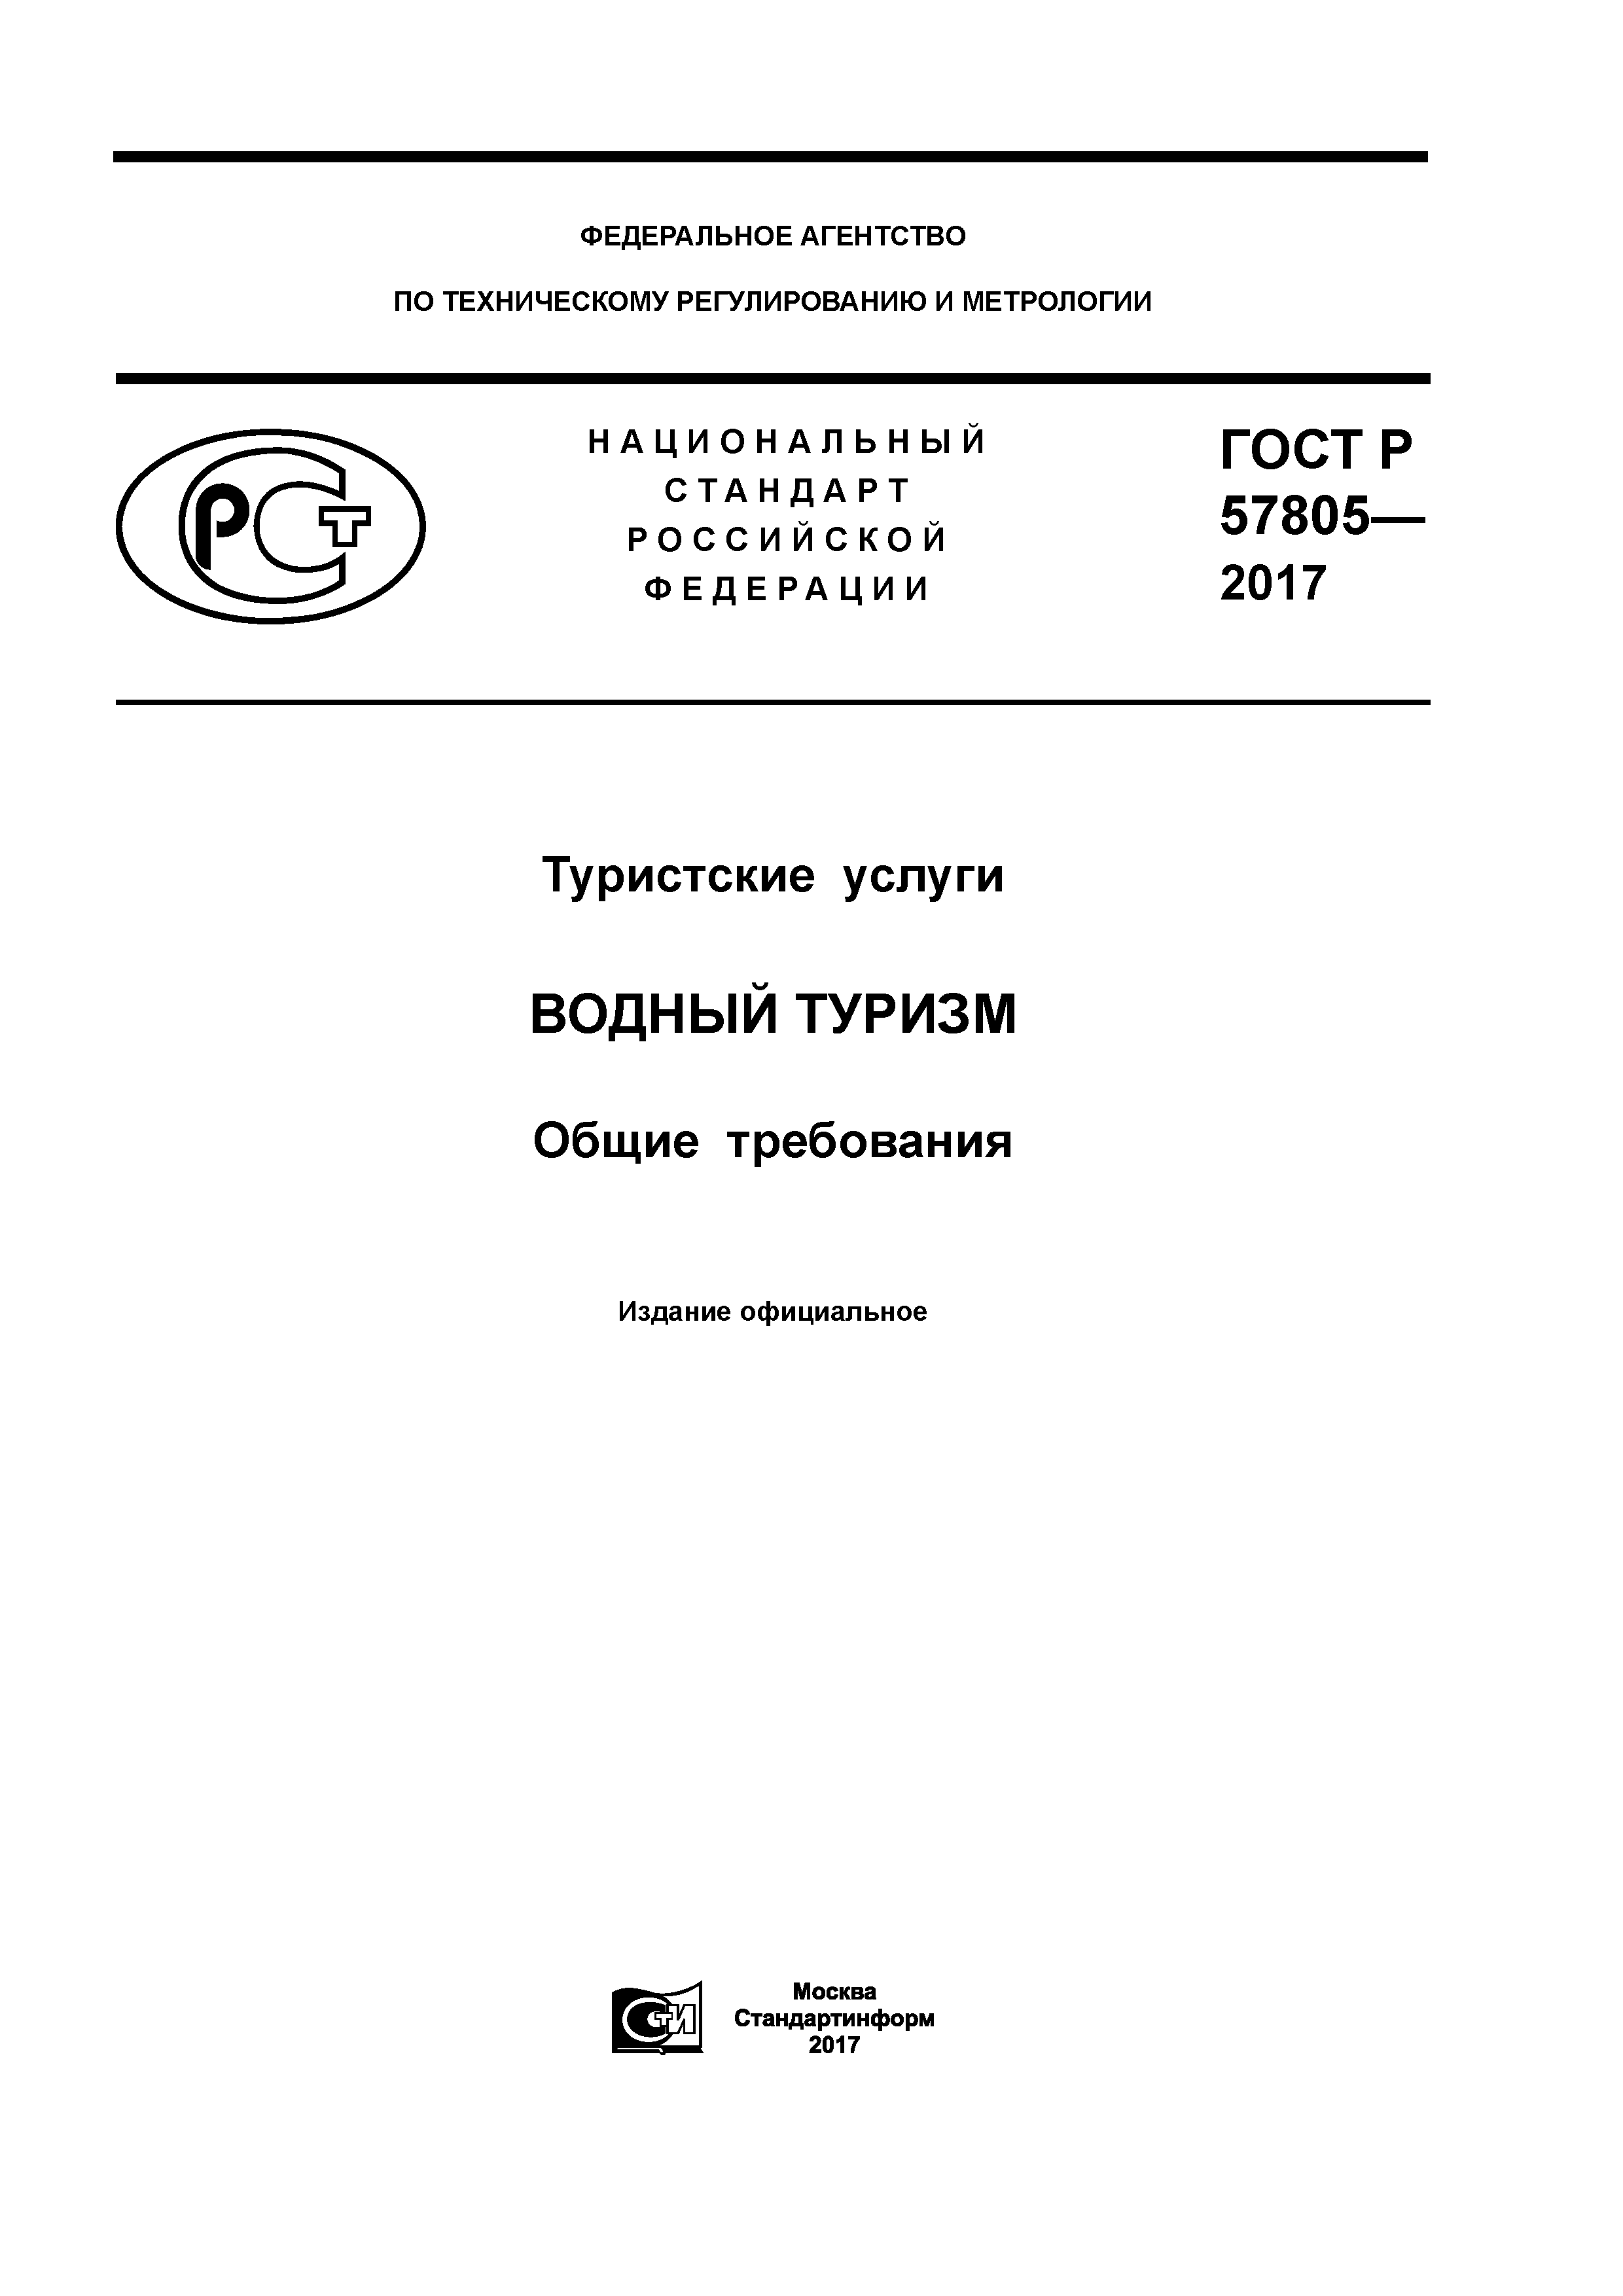 ГОСТ Р 57805-2017